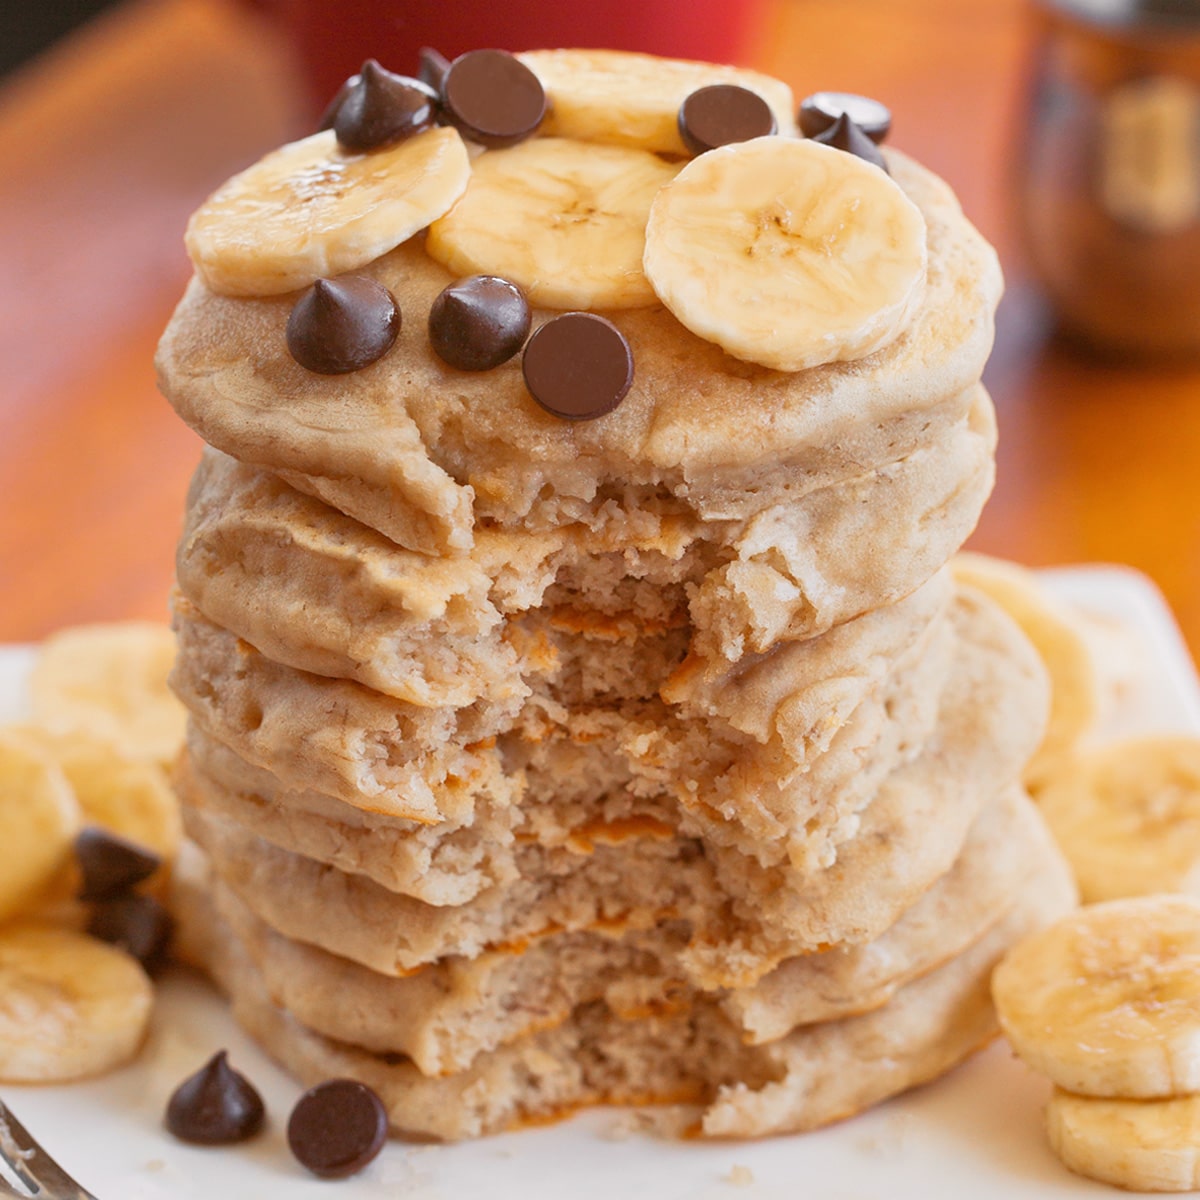 Vegan Banana Pancakes - The Best Fluffy Pancake Recipe!